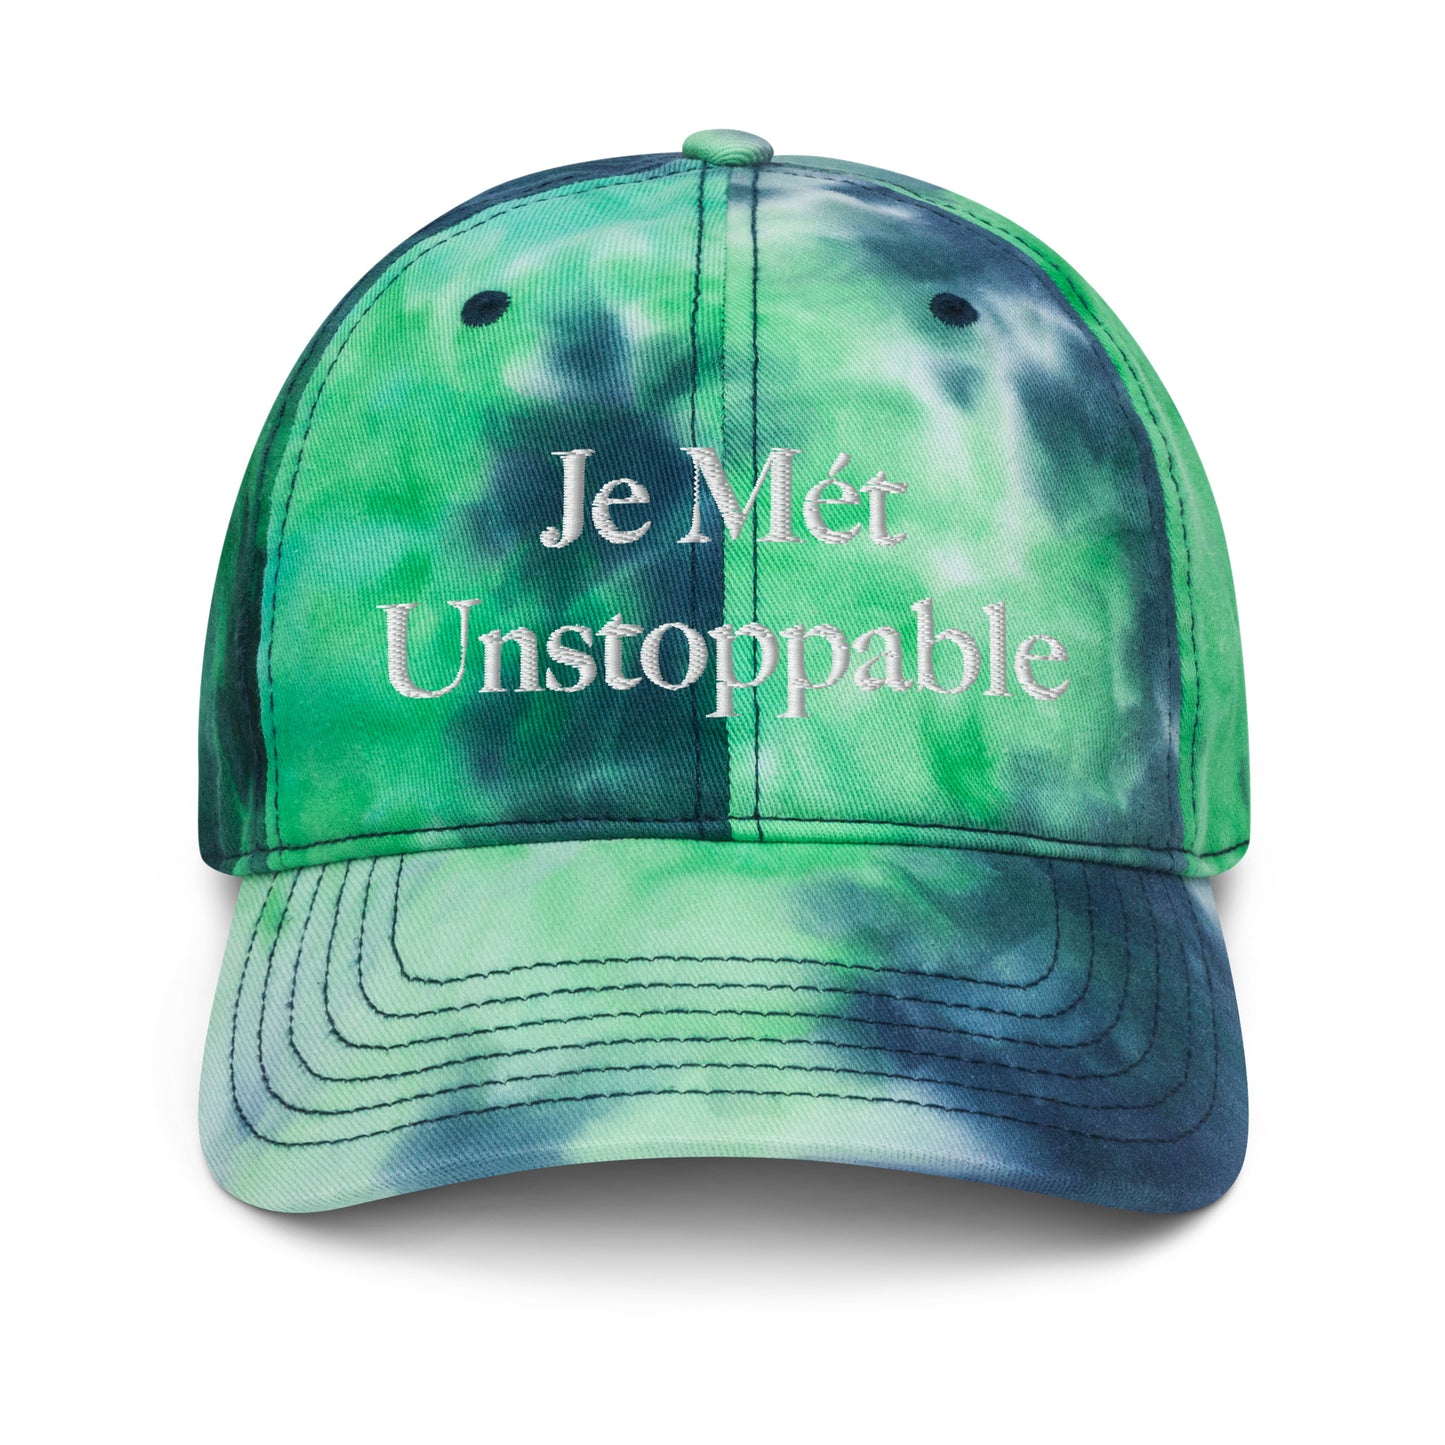 Unstoppable Tie dye hat